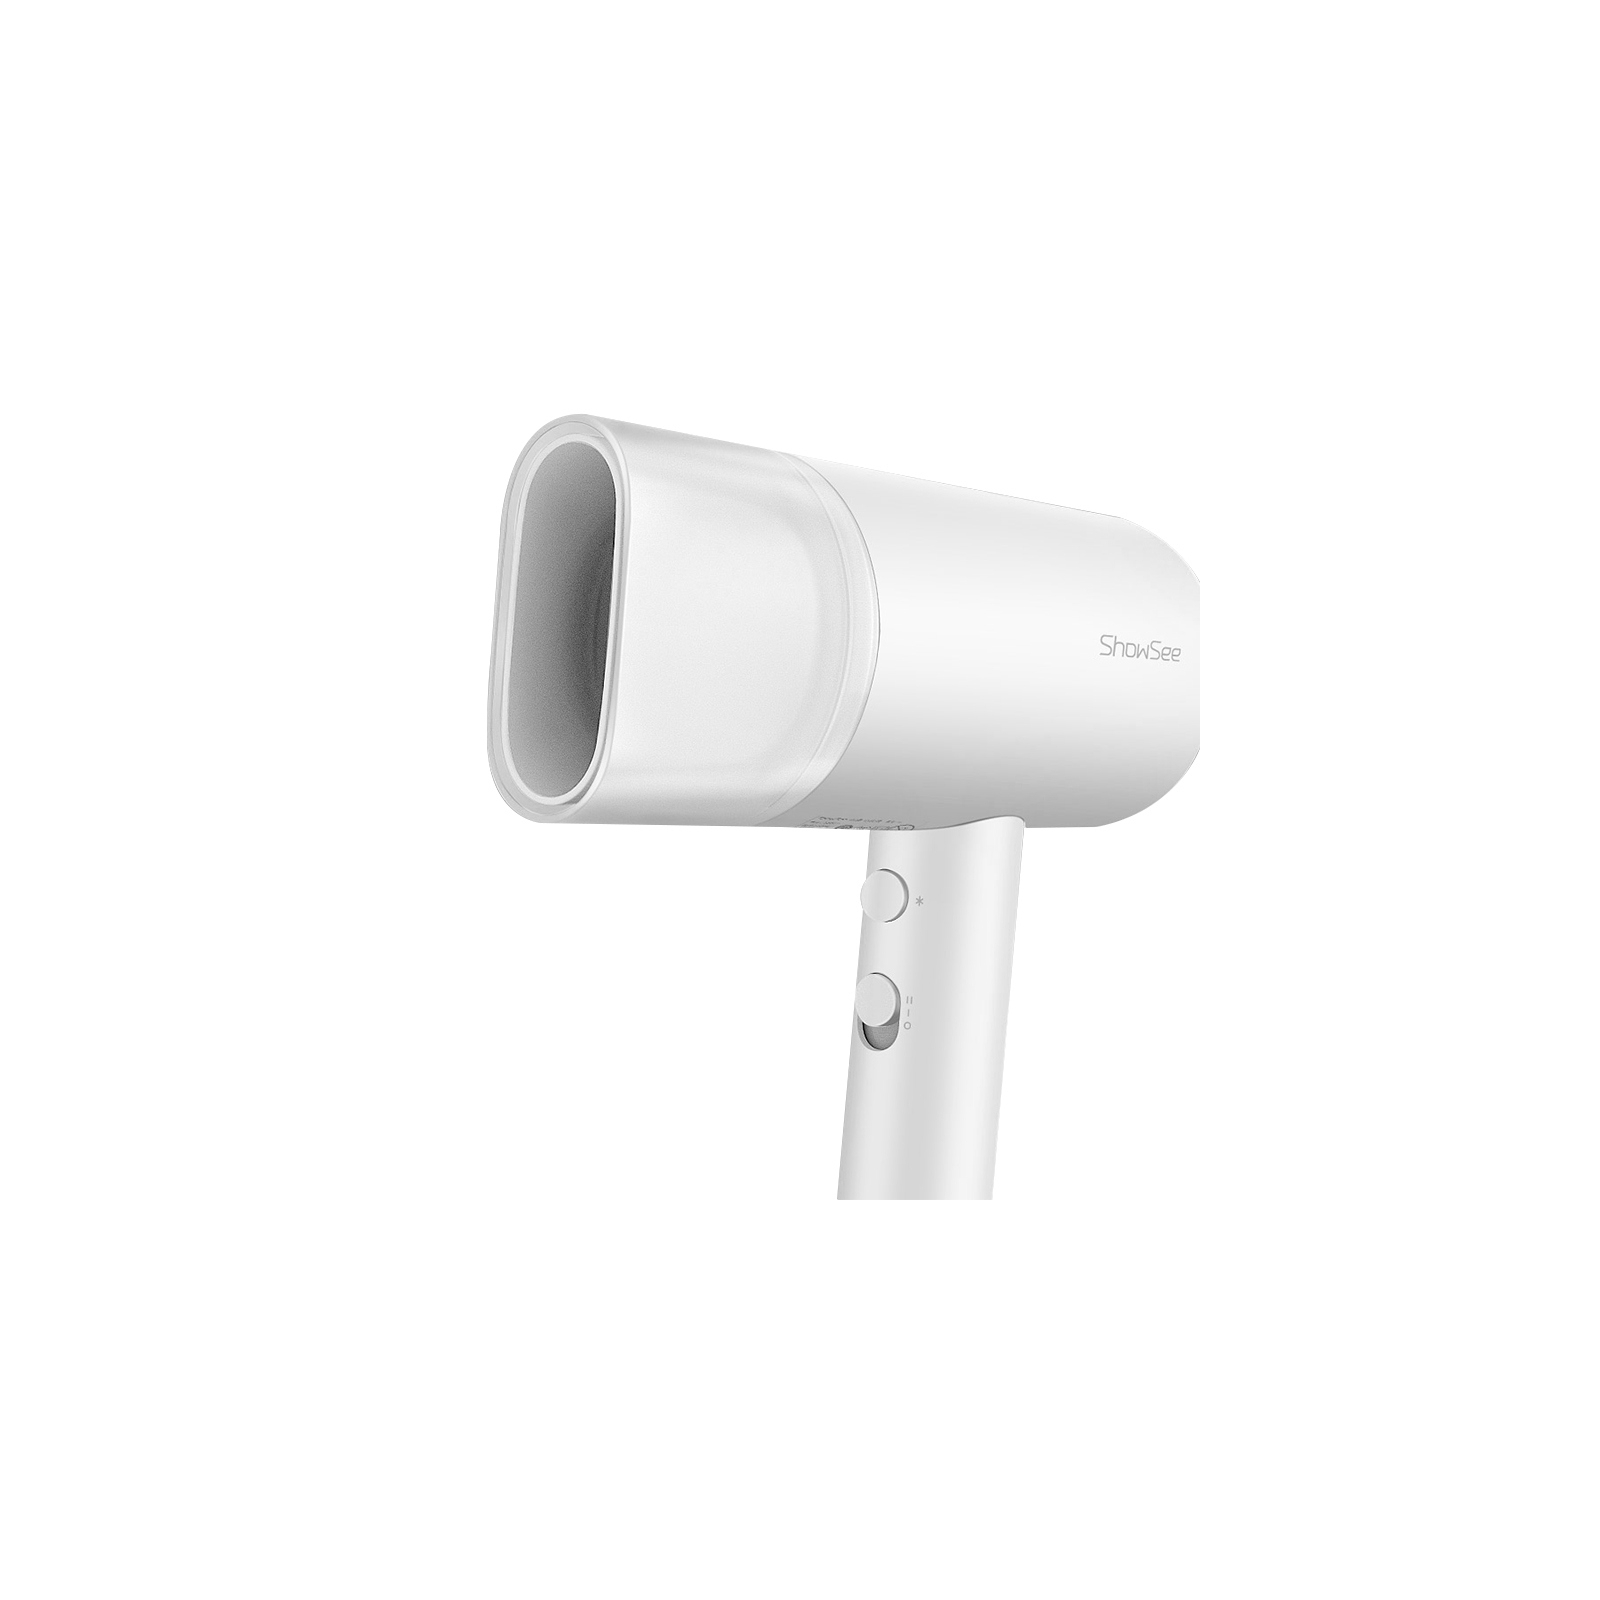 Фен Xiaomi ShowSee A1-W White зображення 3